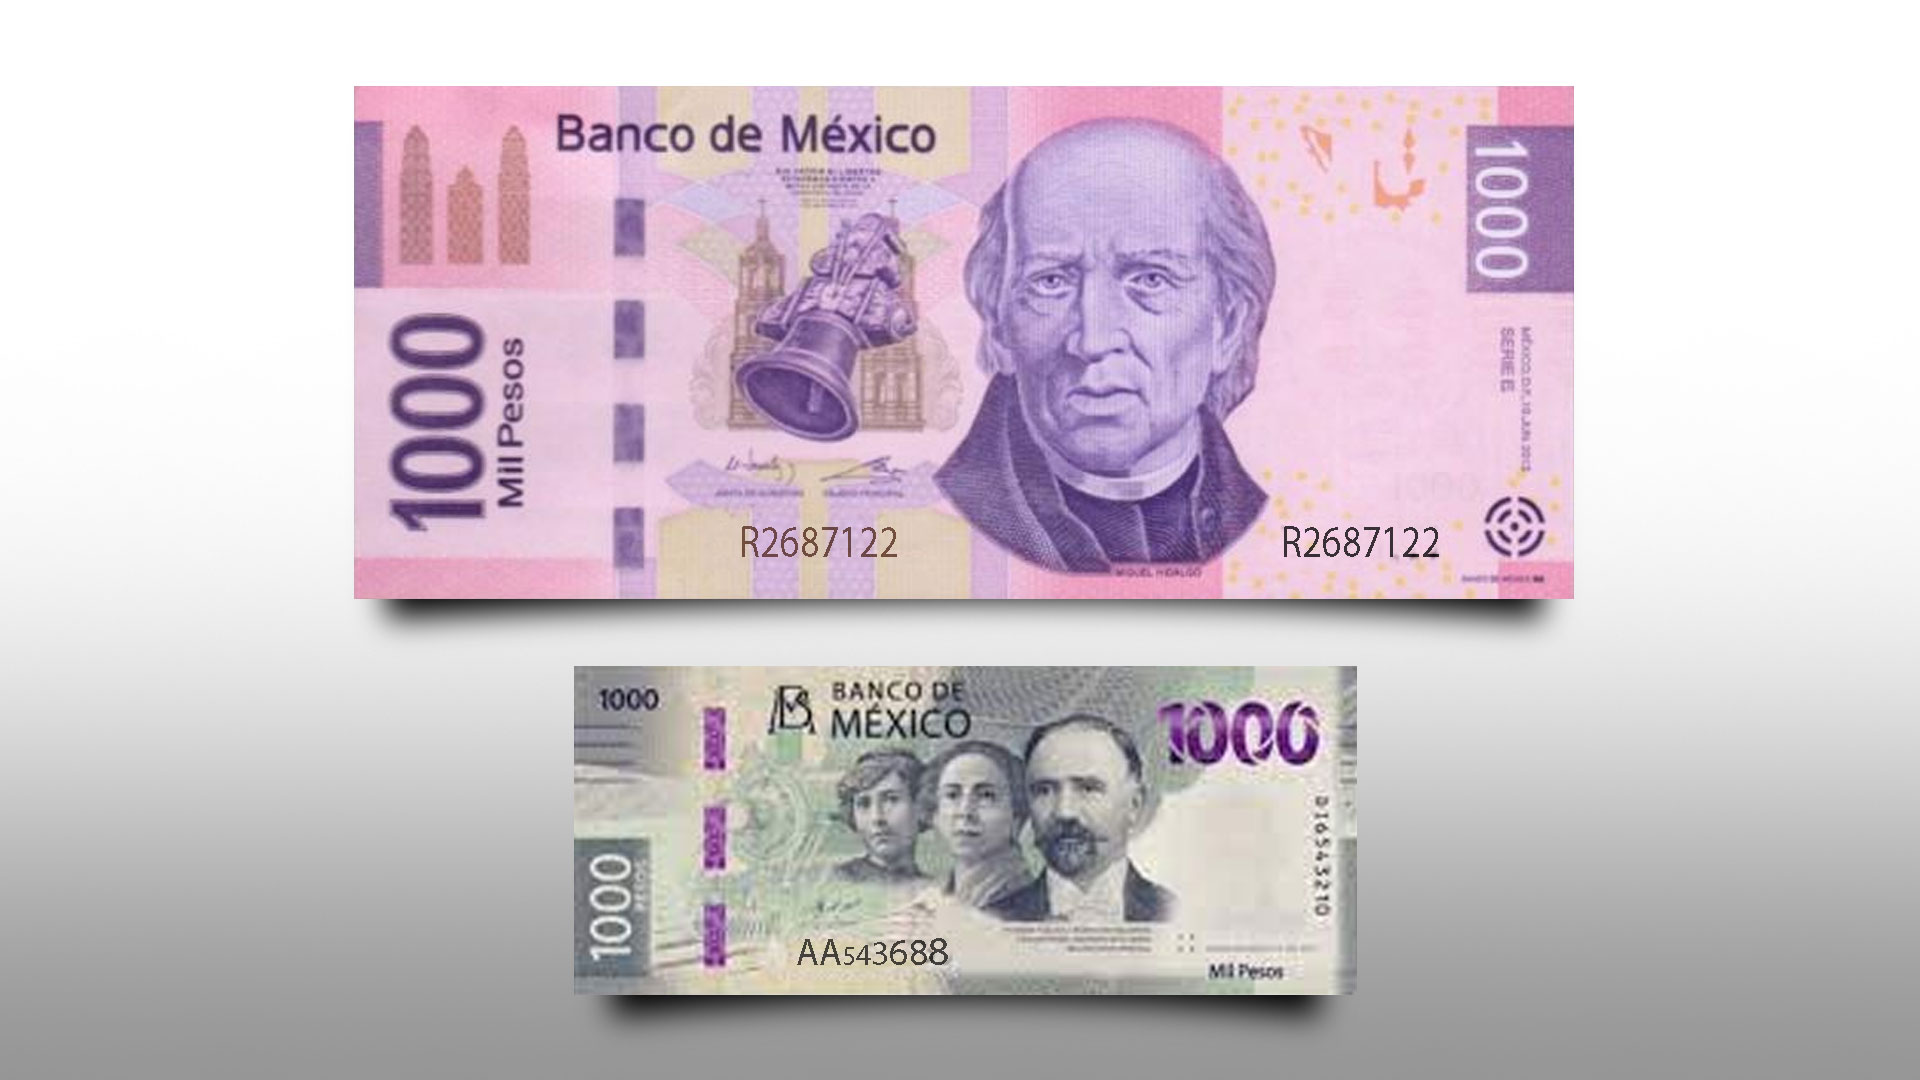 Cómo identificar un billete falso: Banxico te guía paso a paso